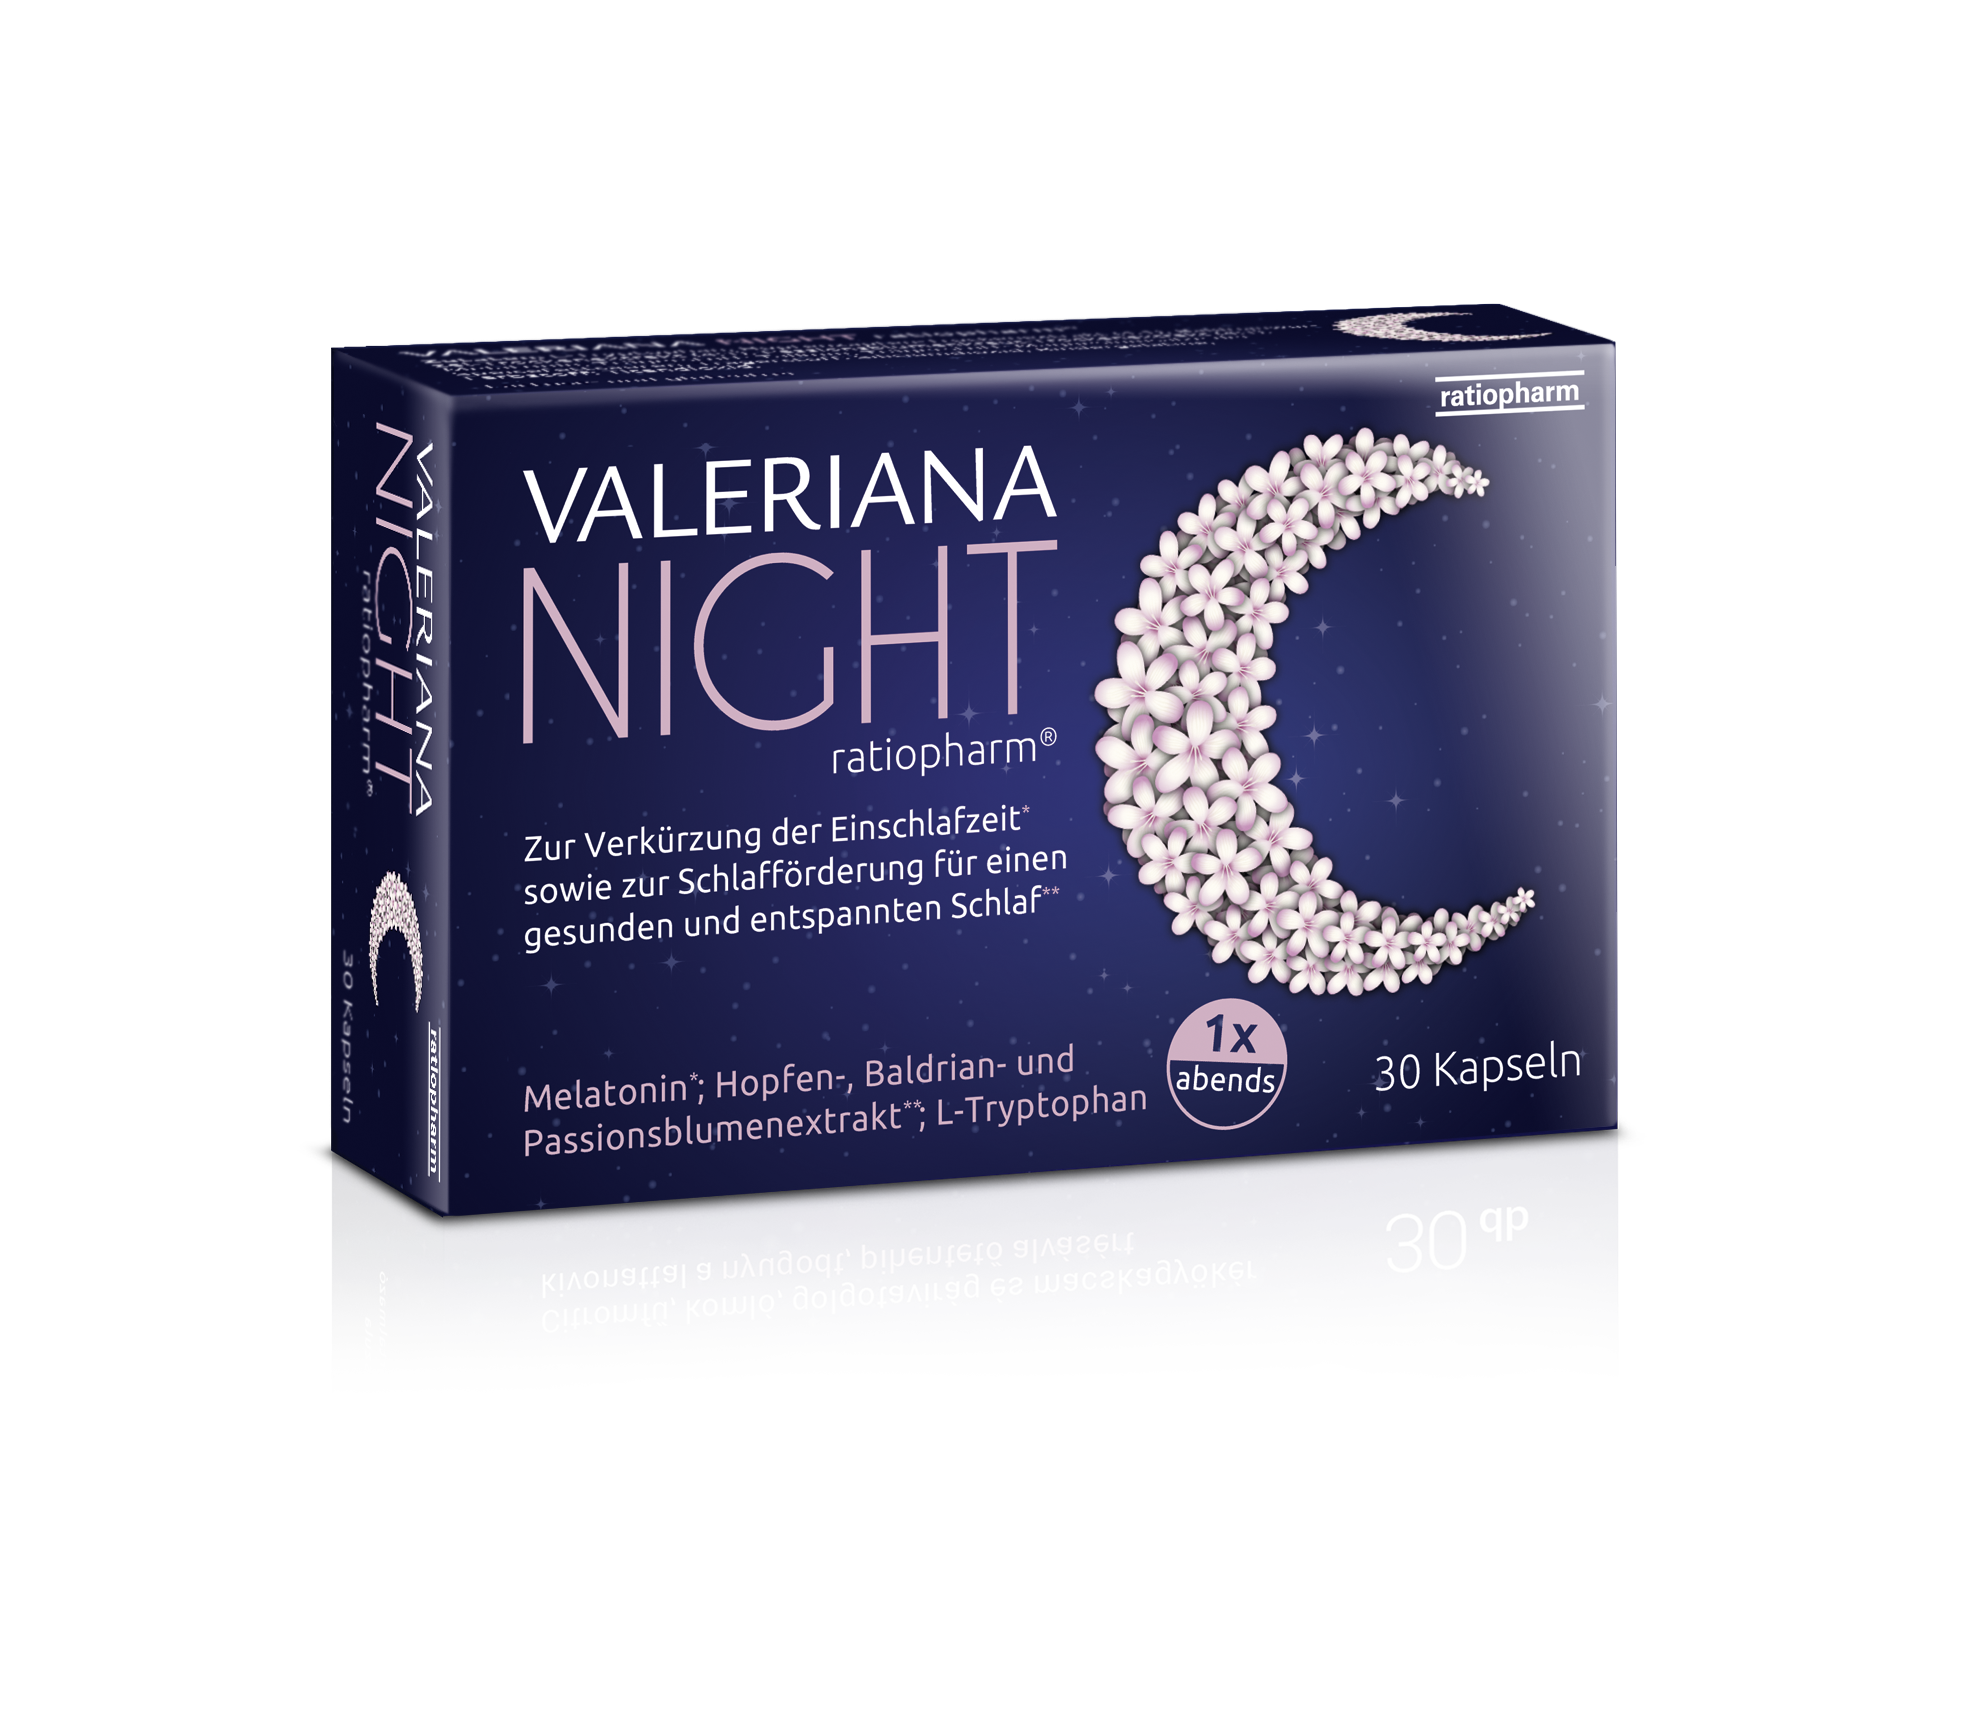 Valeriana NIGHT ratiopharm®